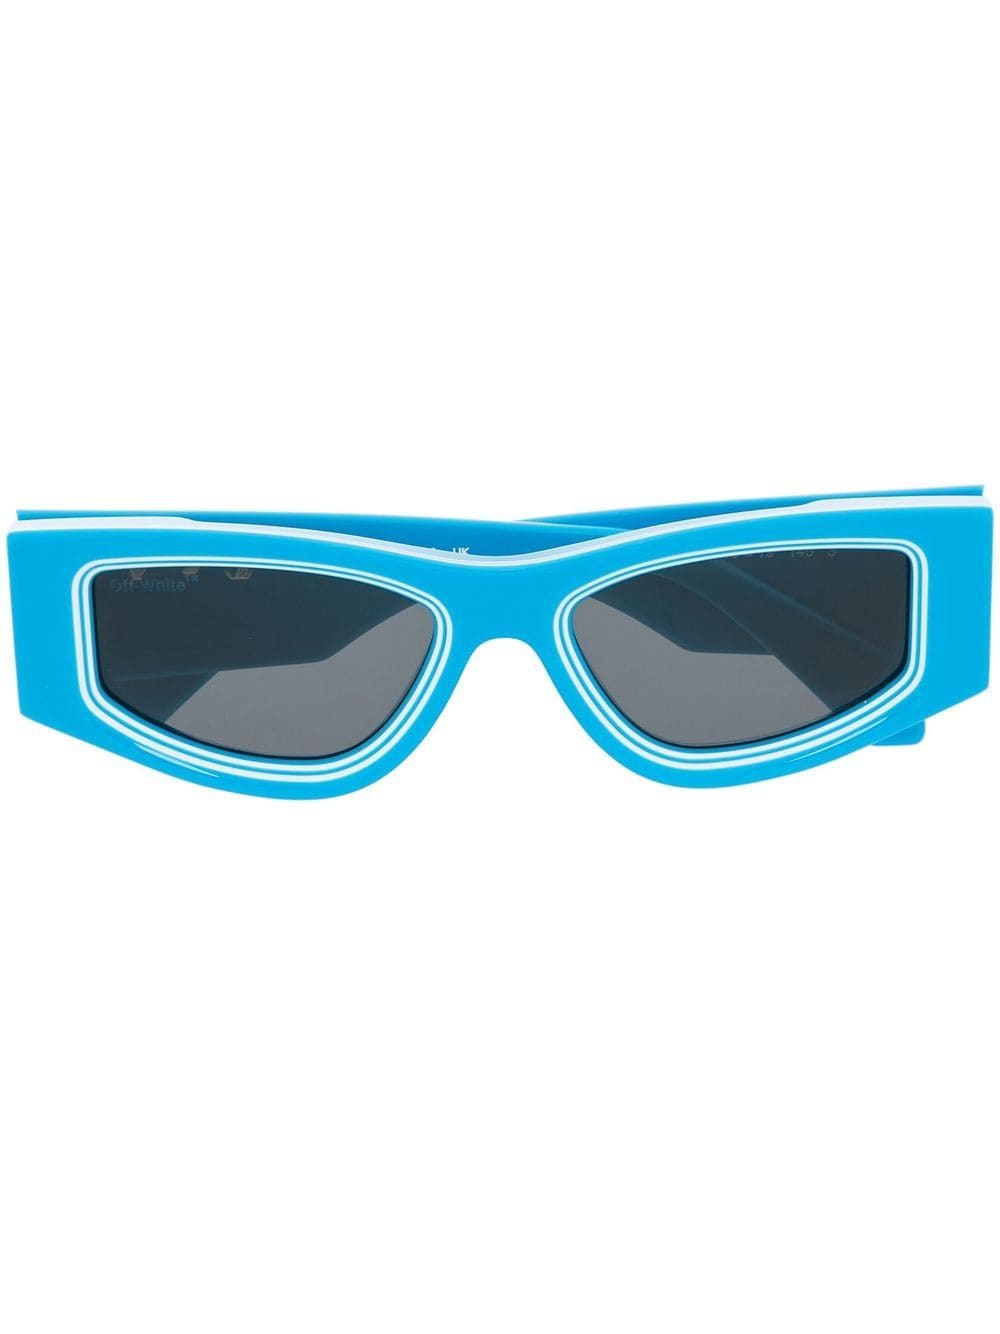 Off-White Andy 53mm Rectangular Sunglasses Blue Dark